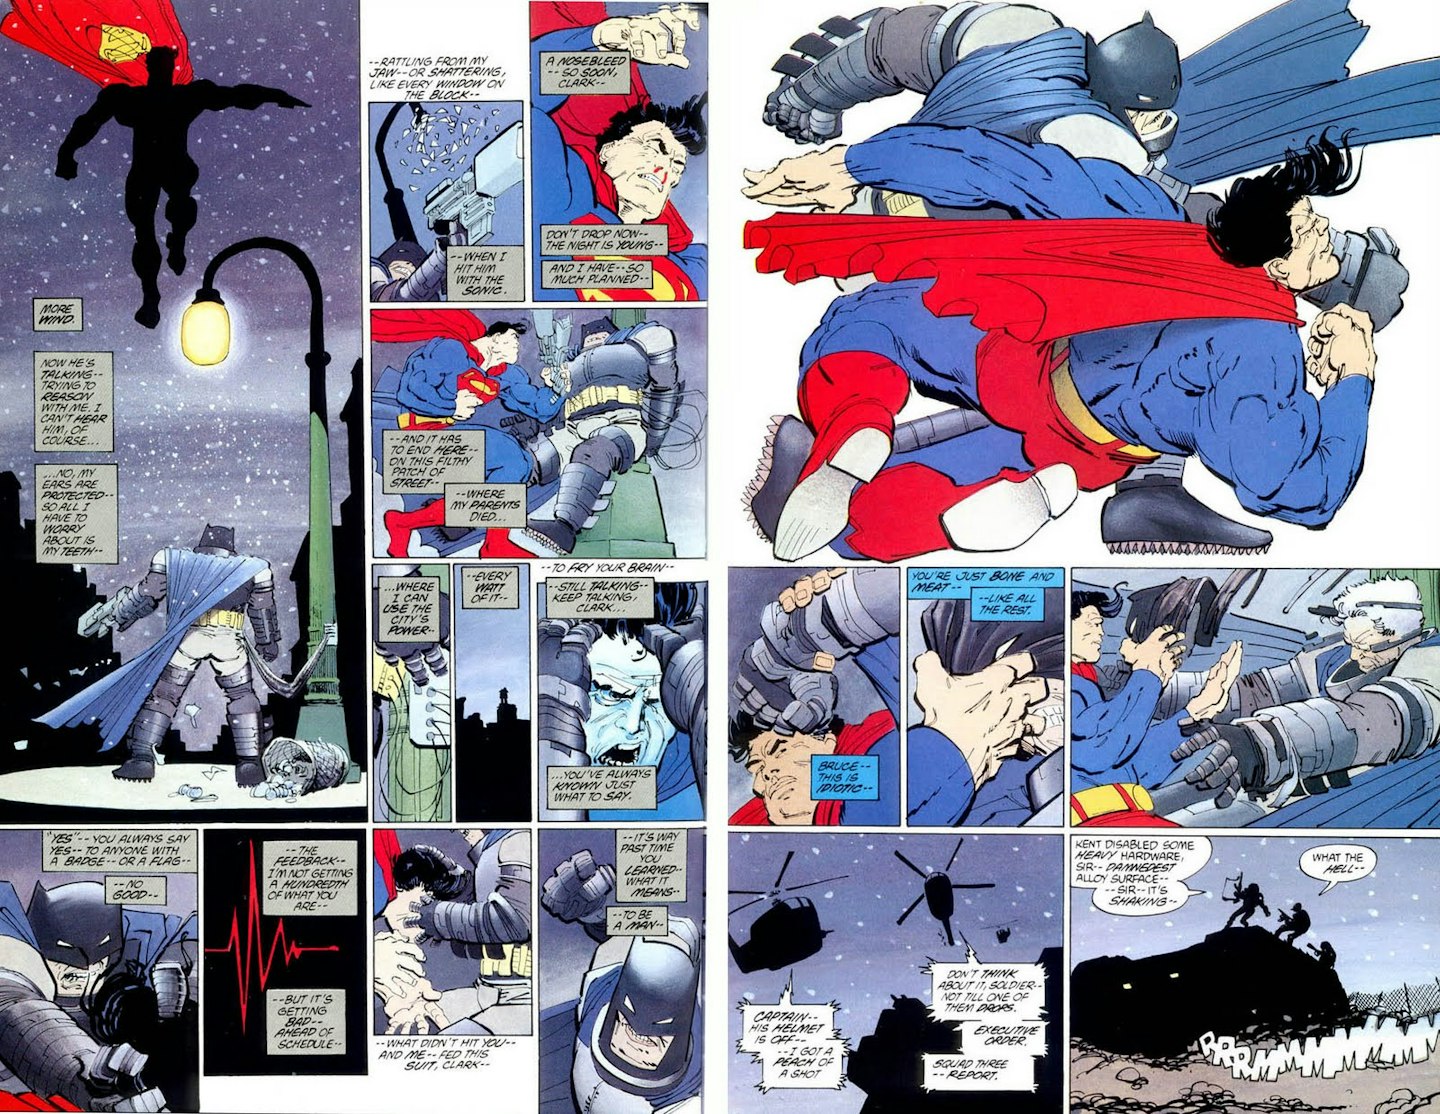 Batman versus Superman in Frank Miller's The Dark Knight Returns